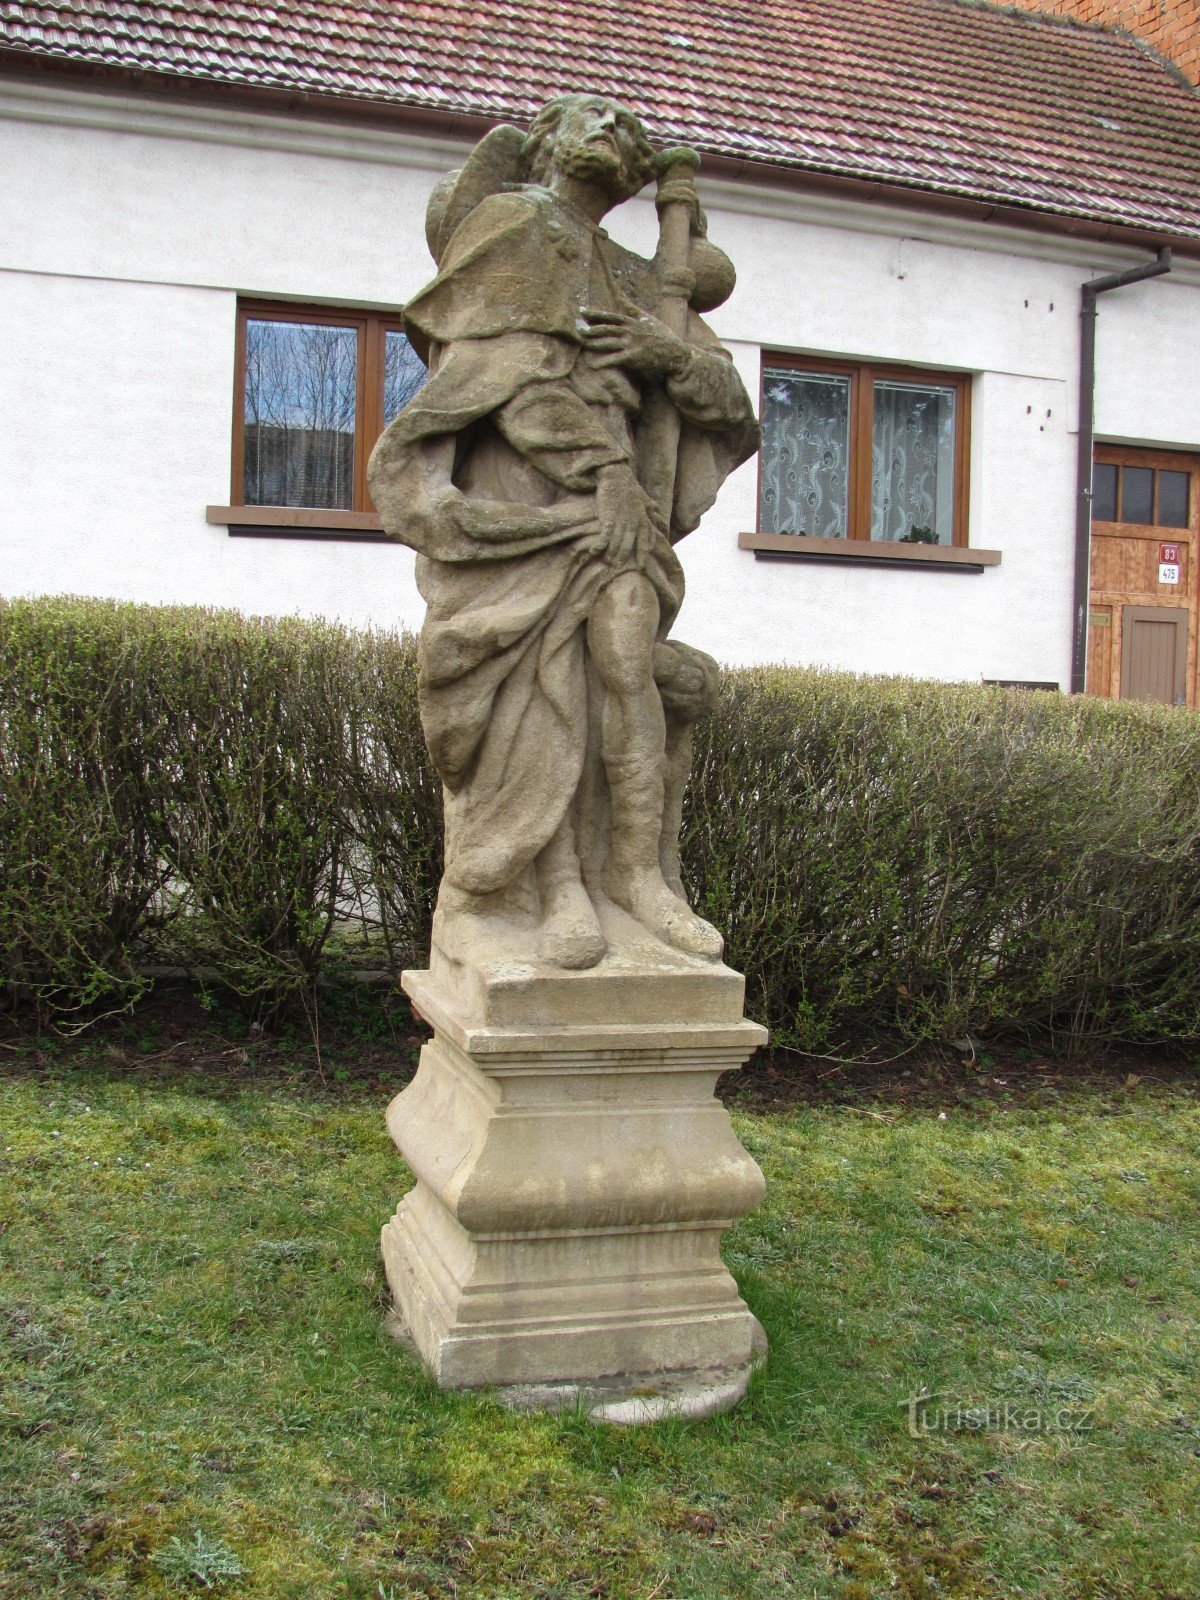 Boskovice - statuia Sf. Rocha